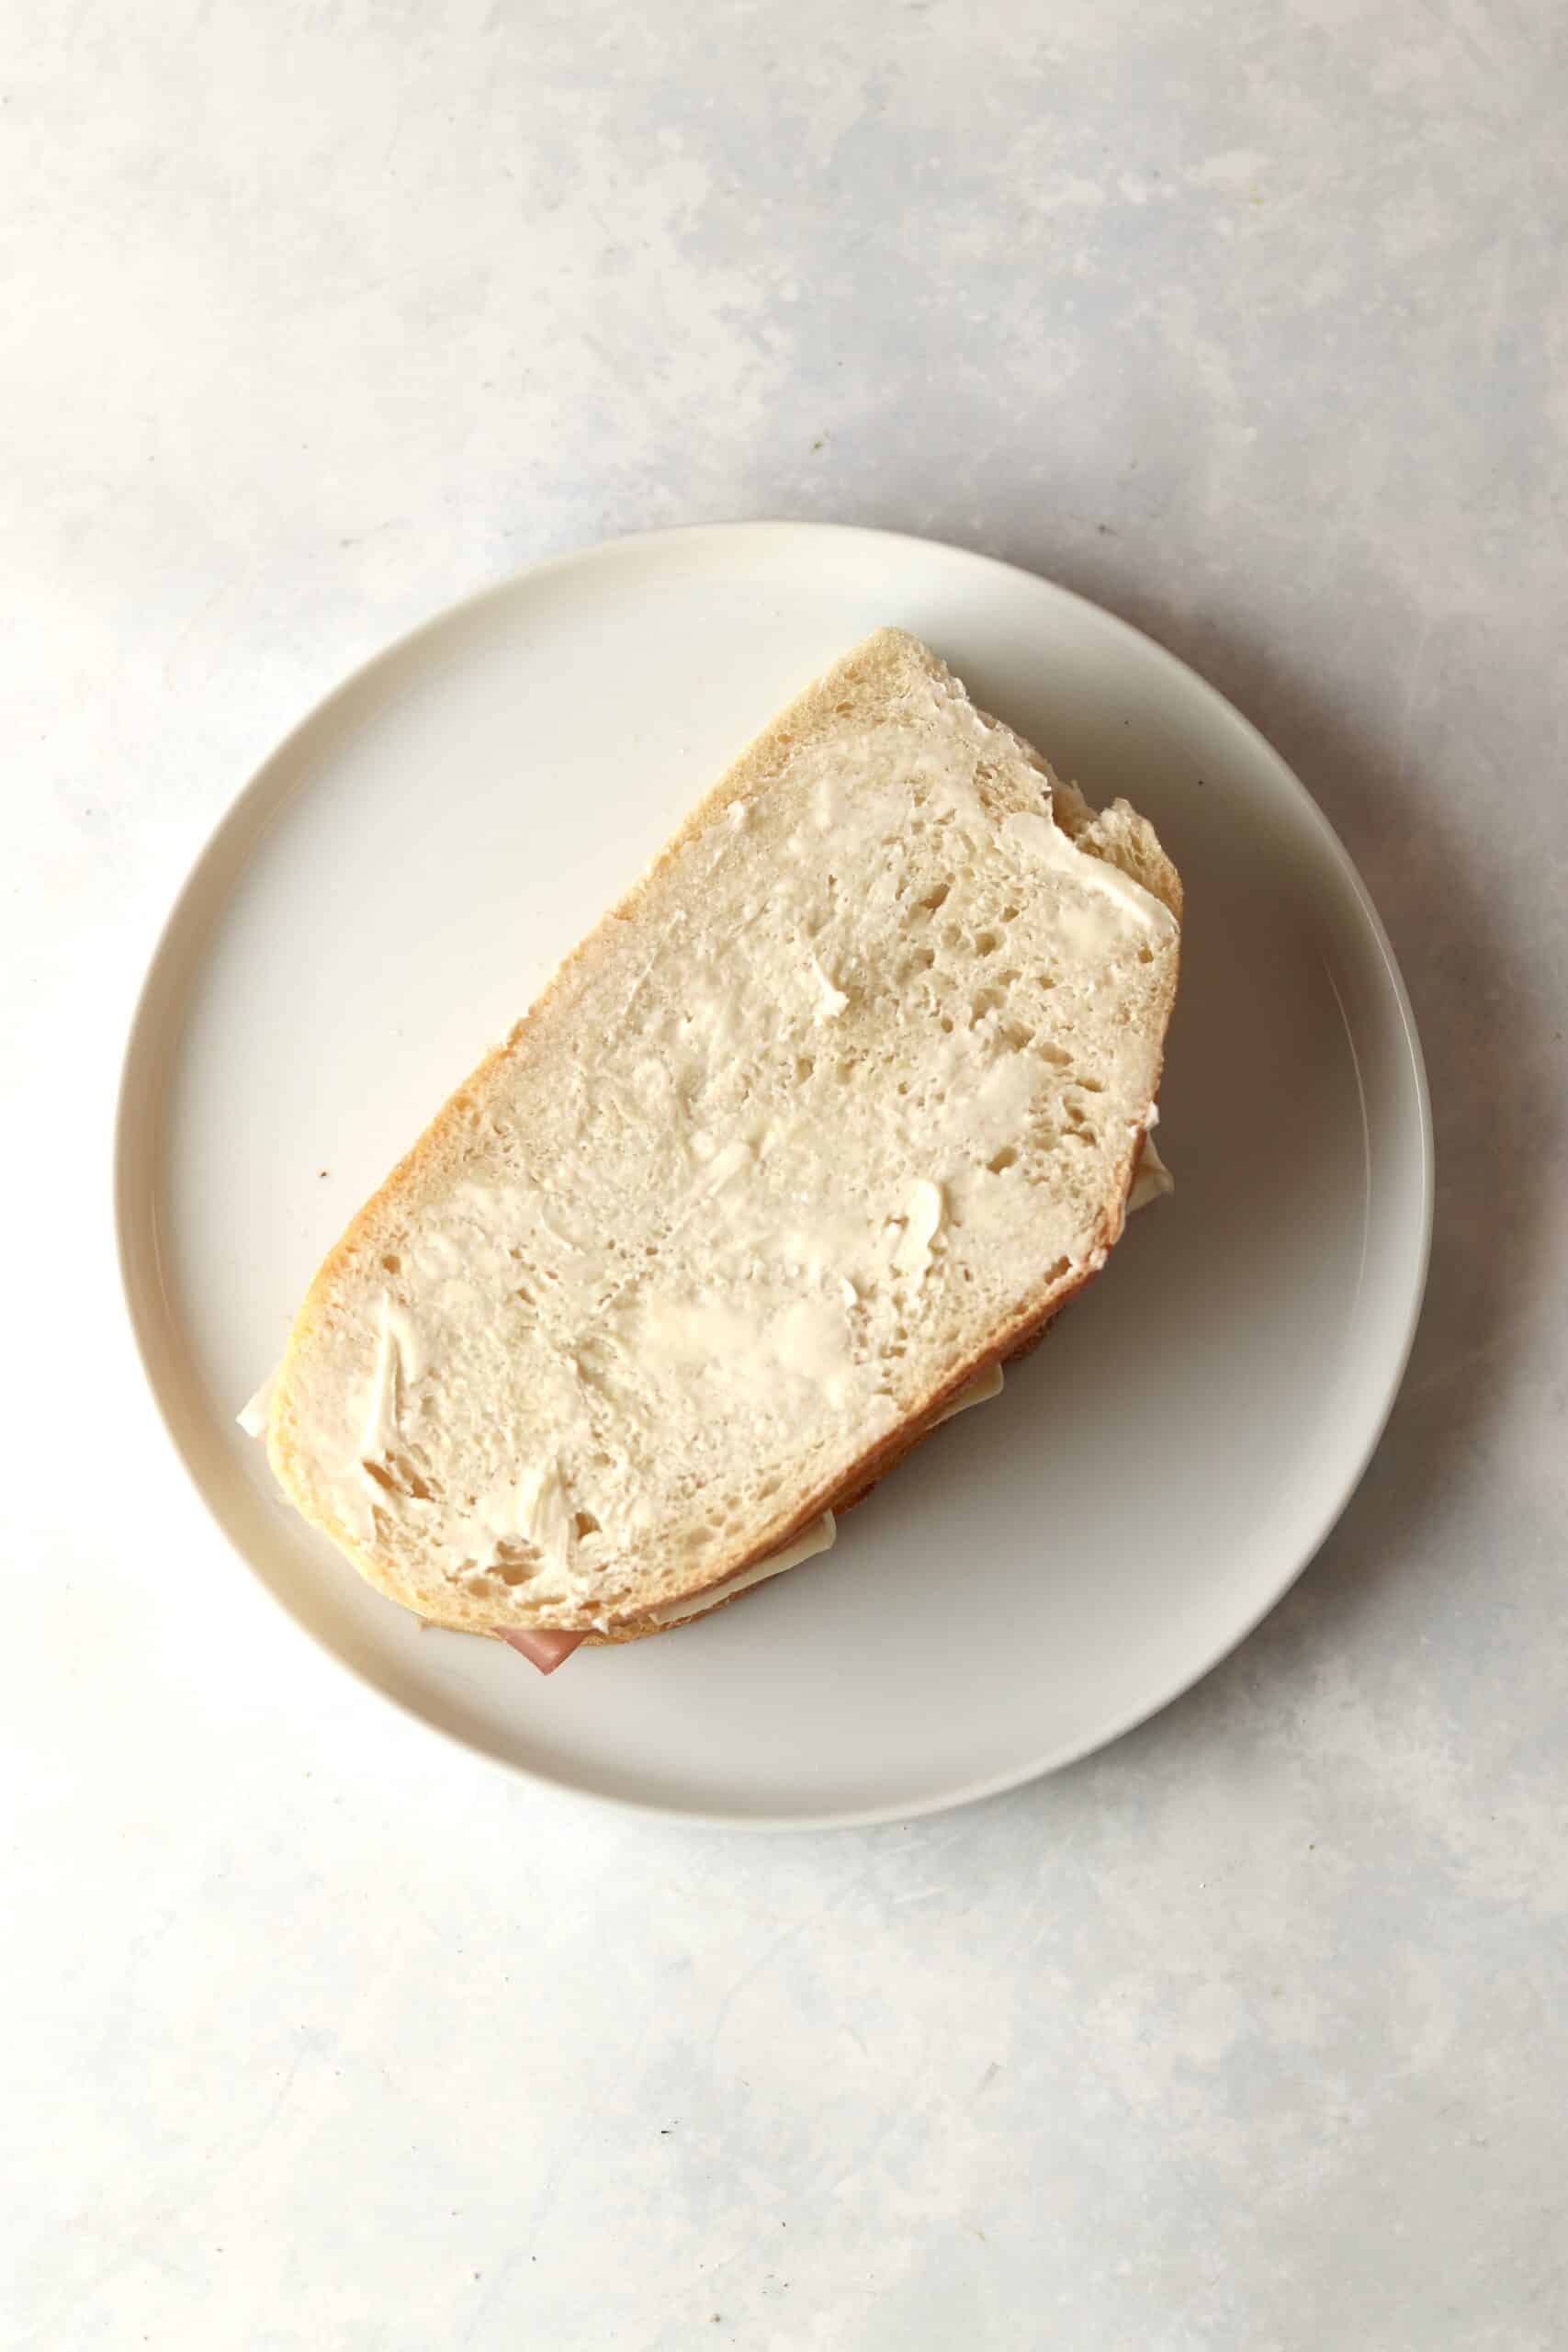 butter smeared bread slice